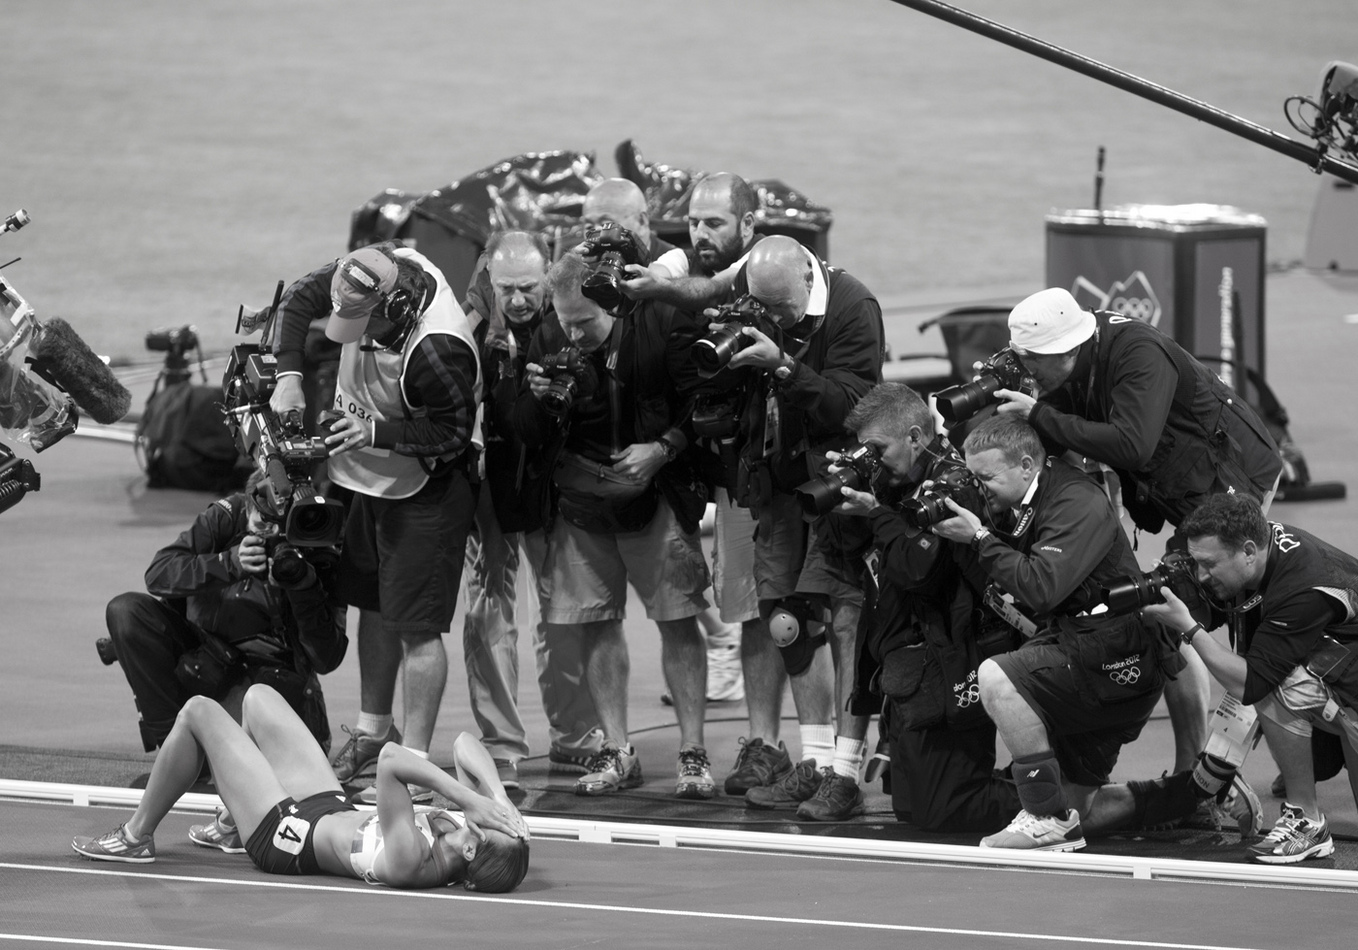 Jessica Ennis collapses at Finish Line after winning Heptathalon : London 2012 / Olympics : David Burnett | Photographer